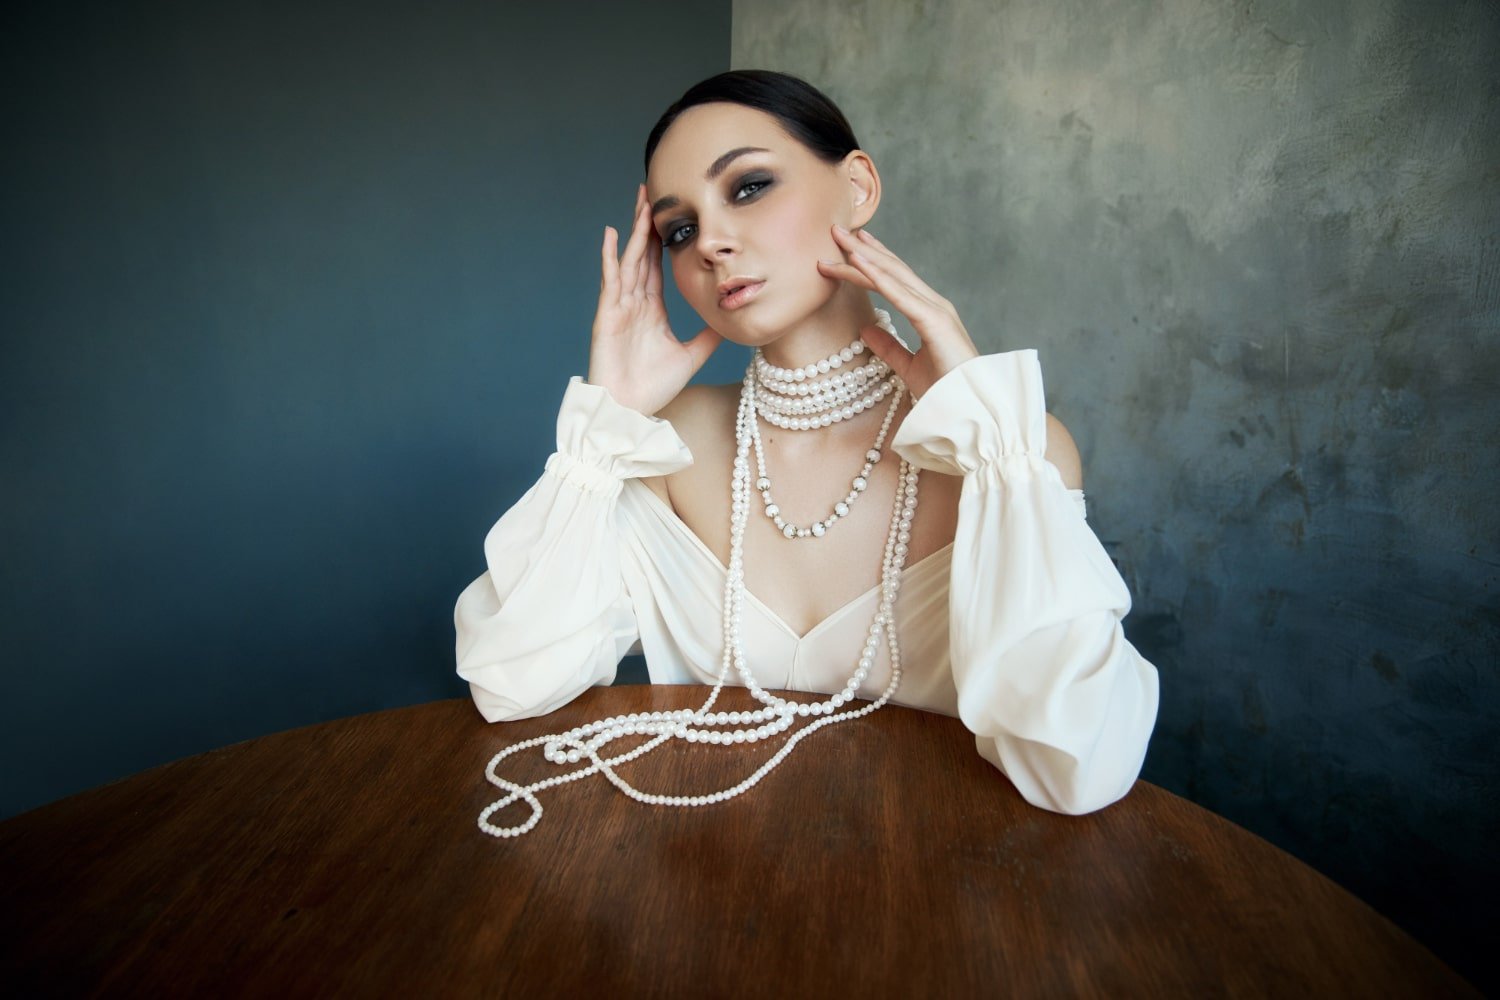 Accessorize In Style With Lovisa’s Trendy Fashion Jewelry